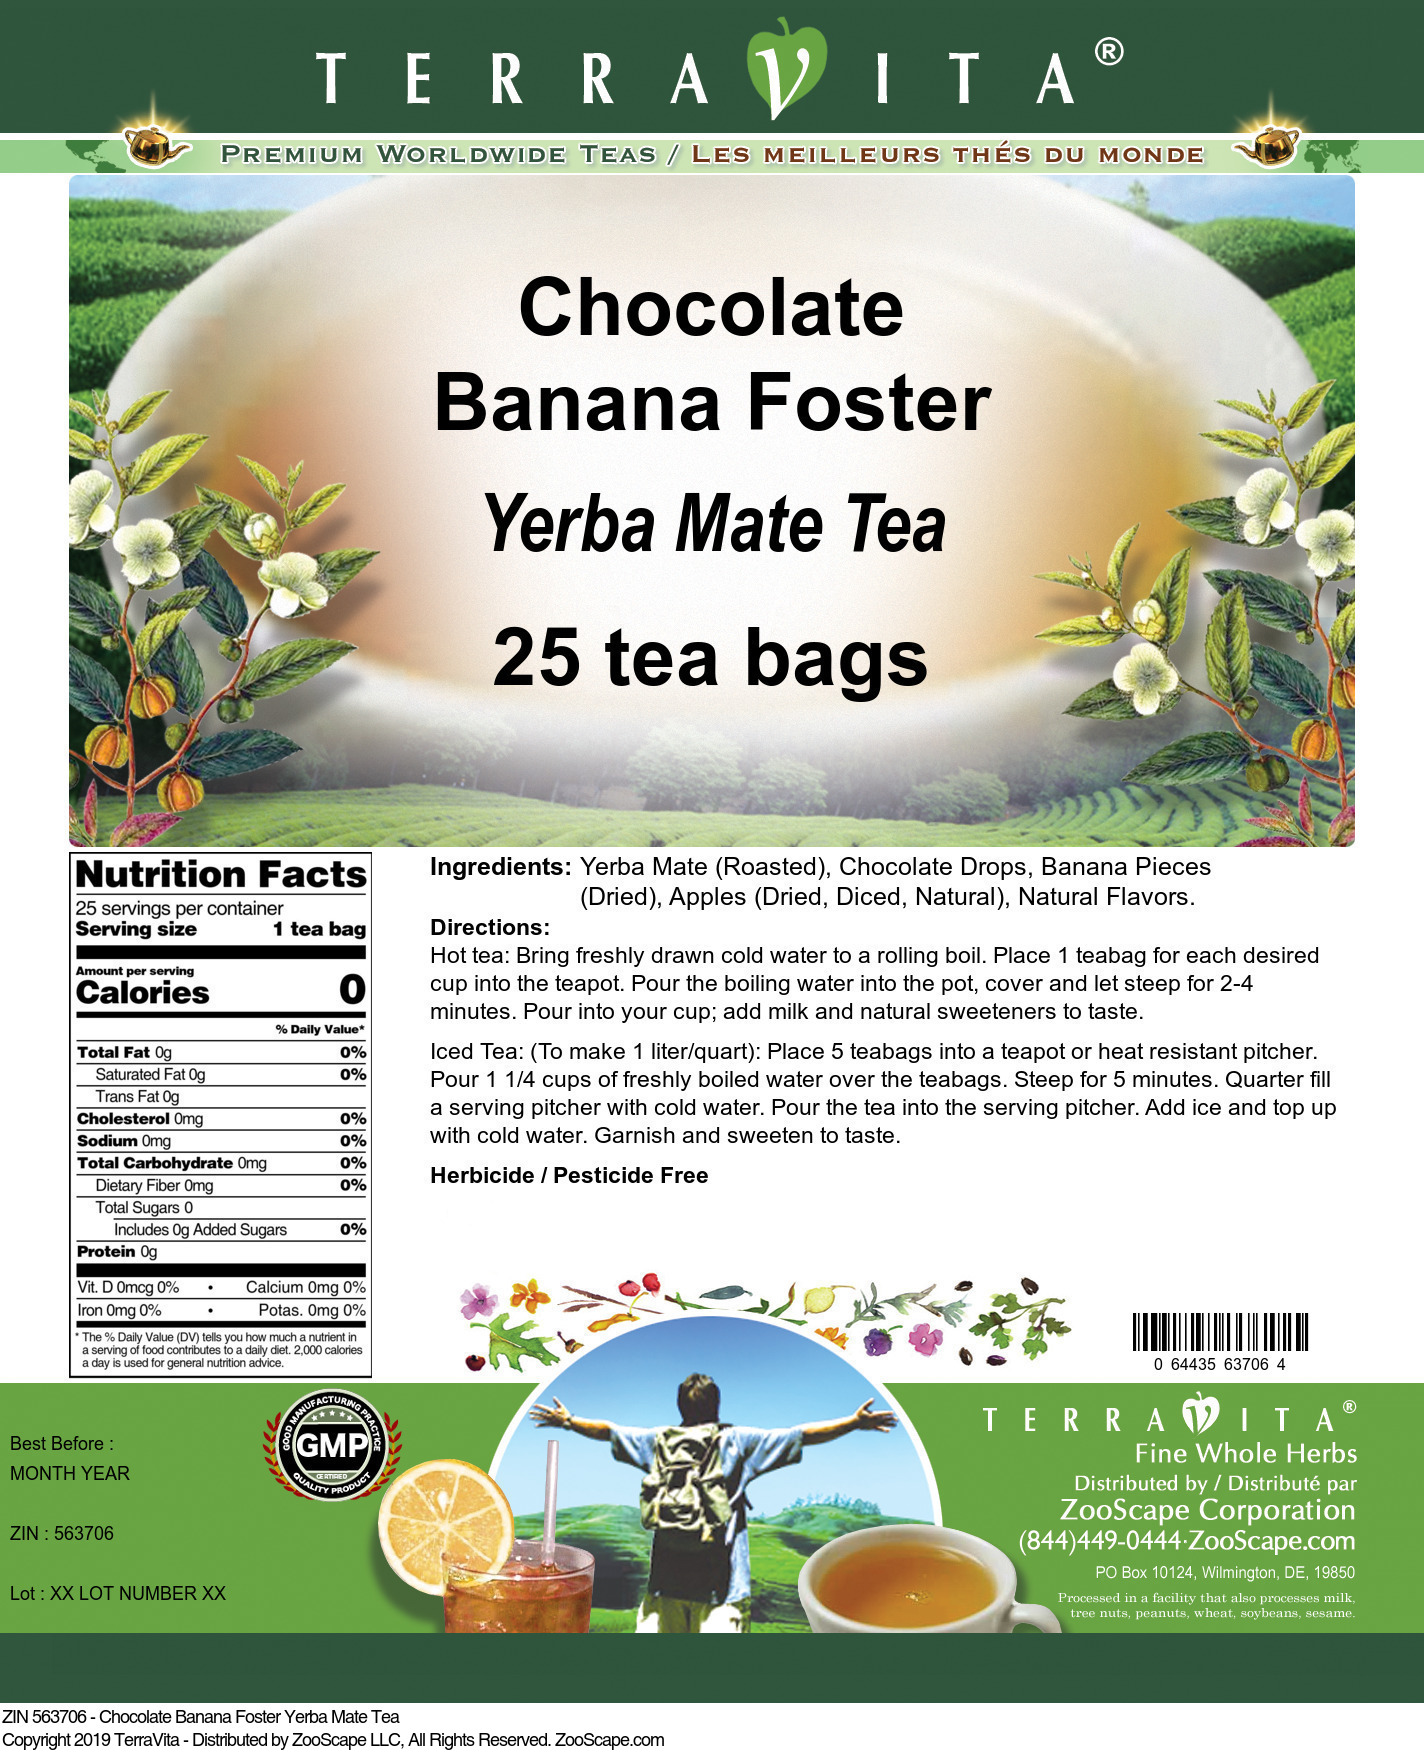 Chocolate Banana Foster Yerba Mate Tea - Label